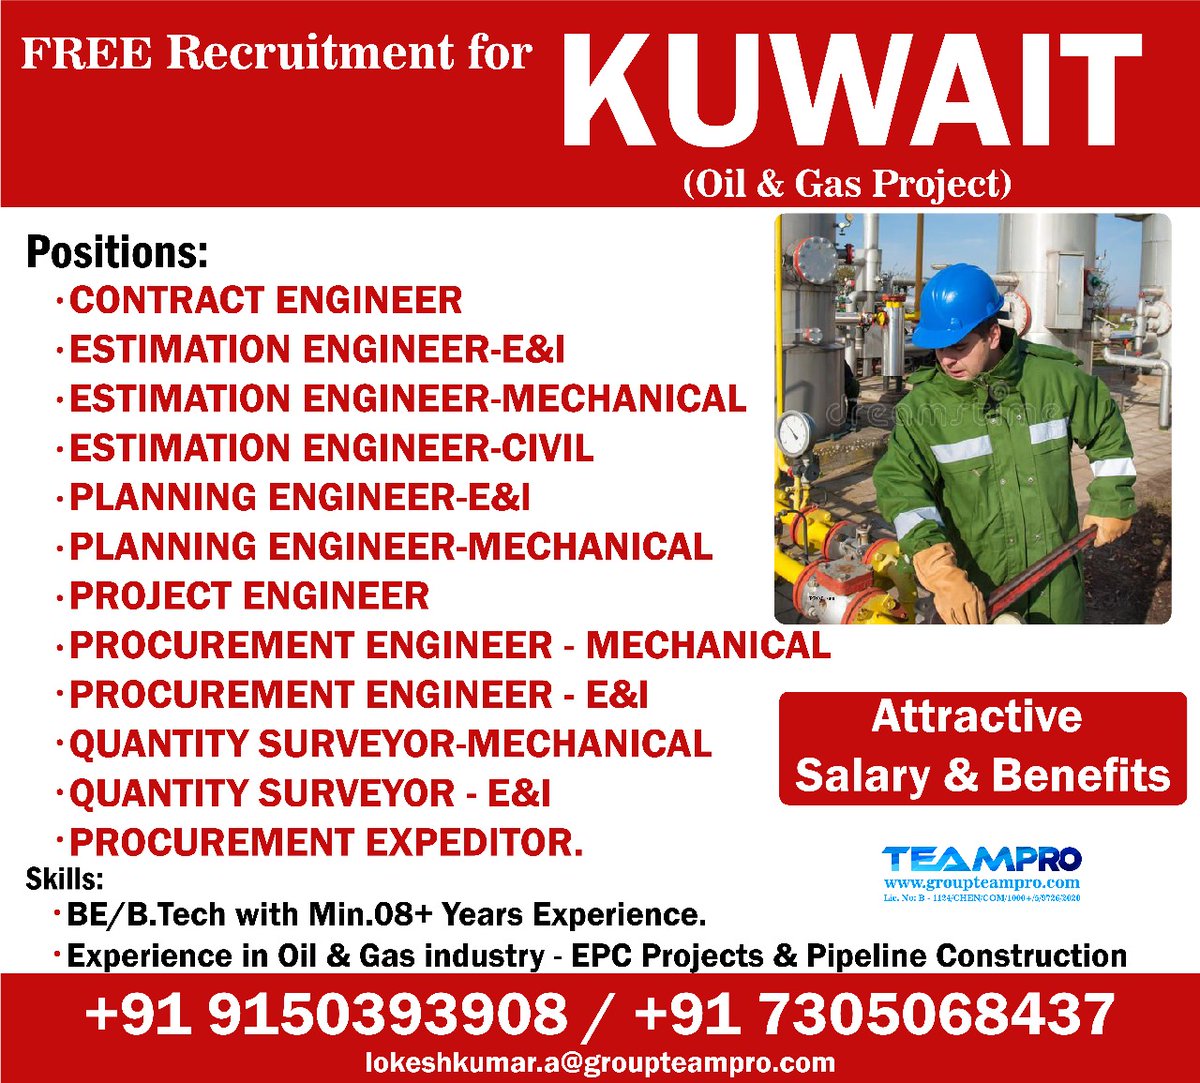 #recruitmentforkuwait #kuwaitjobs #kuwaitjobseekers #epcproject #oilandgas #oilandgasconstruction #pipelineconstruction #immediatejoiners #shortlistingunderprogress #onlineinterview